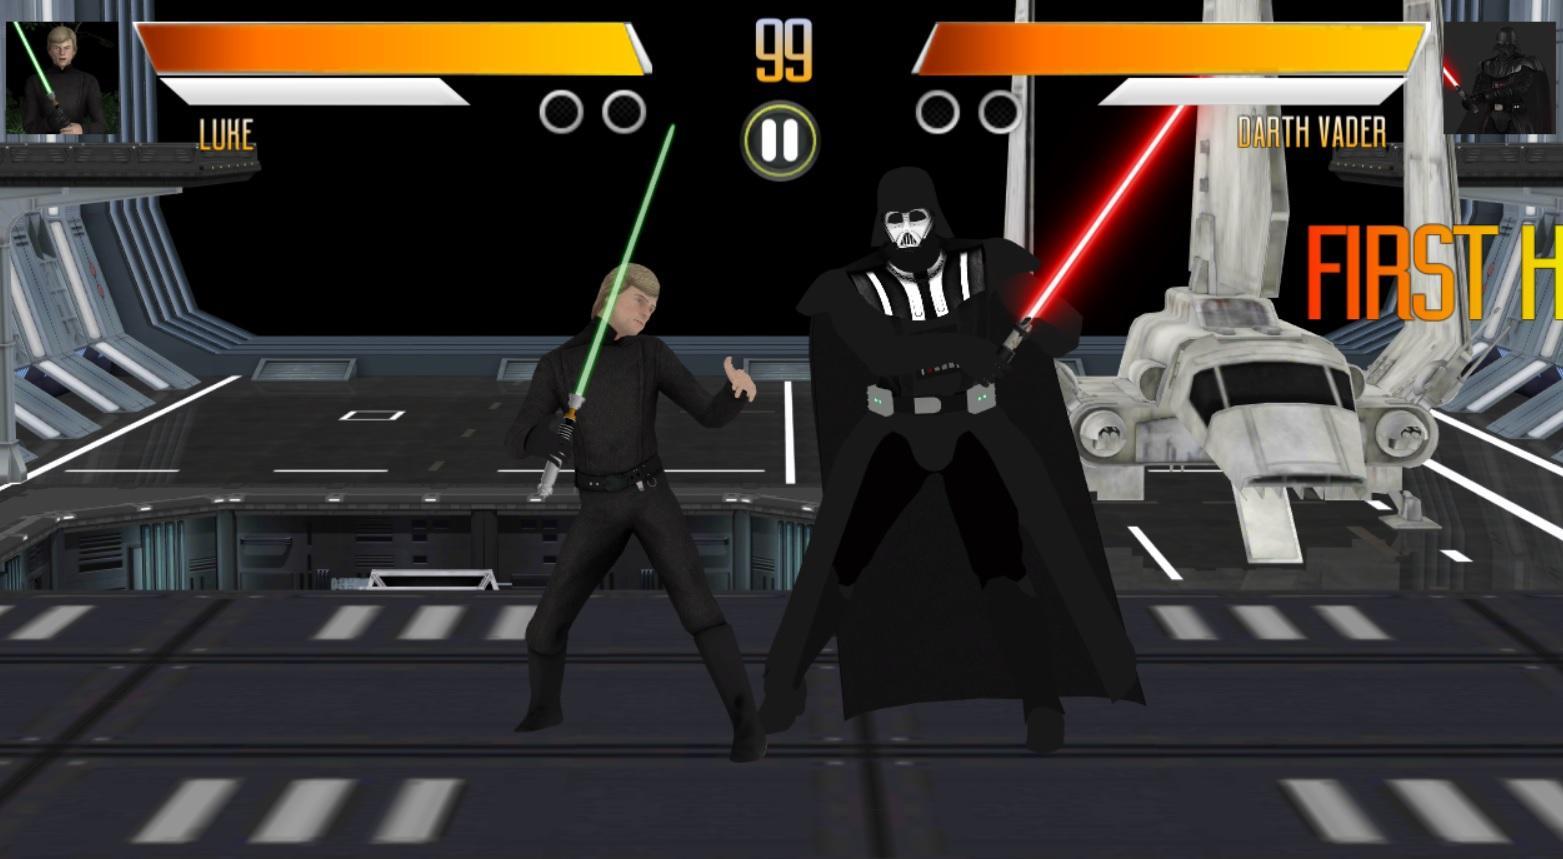 Lightsaber Wars Battle Of Jedi Fighters For Android Apk Download - roblox lightsaber battles 2